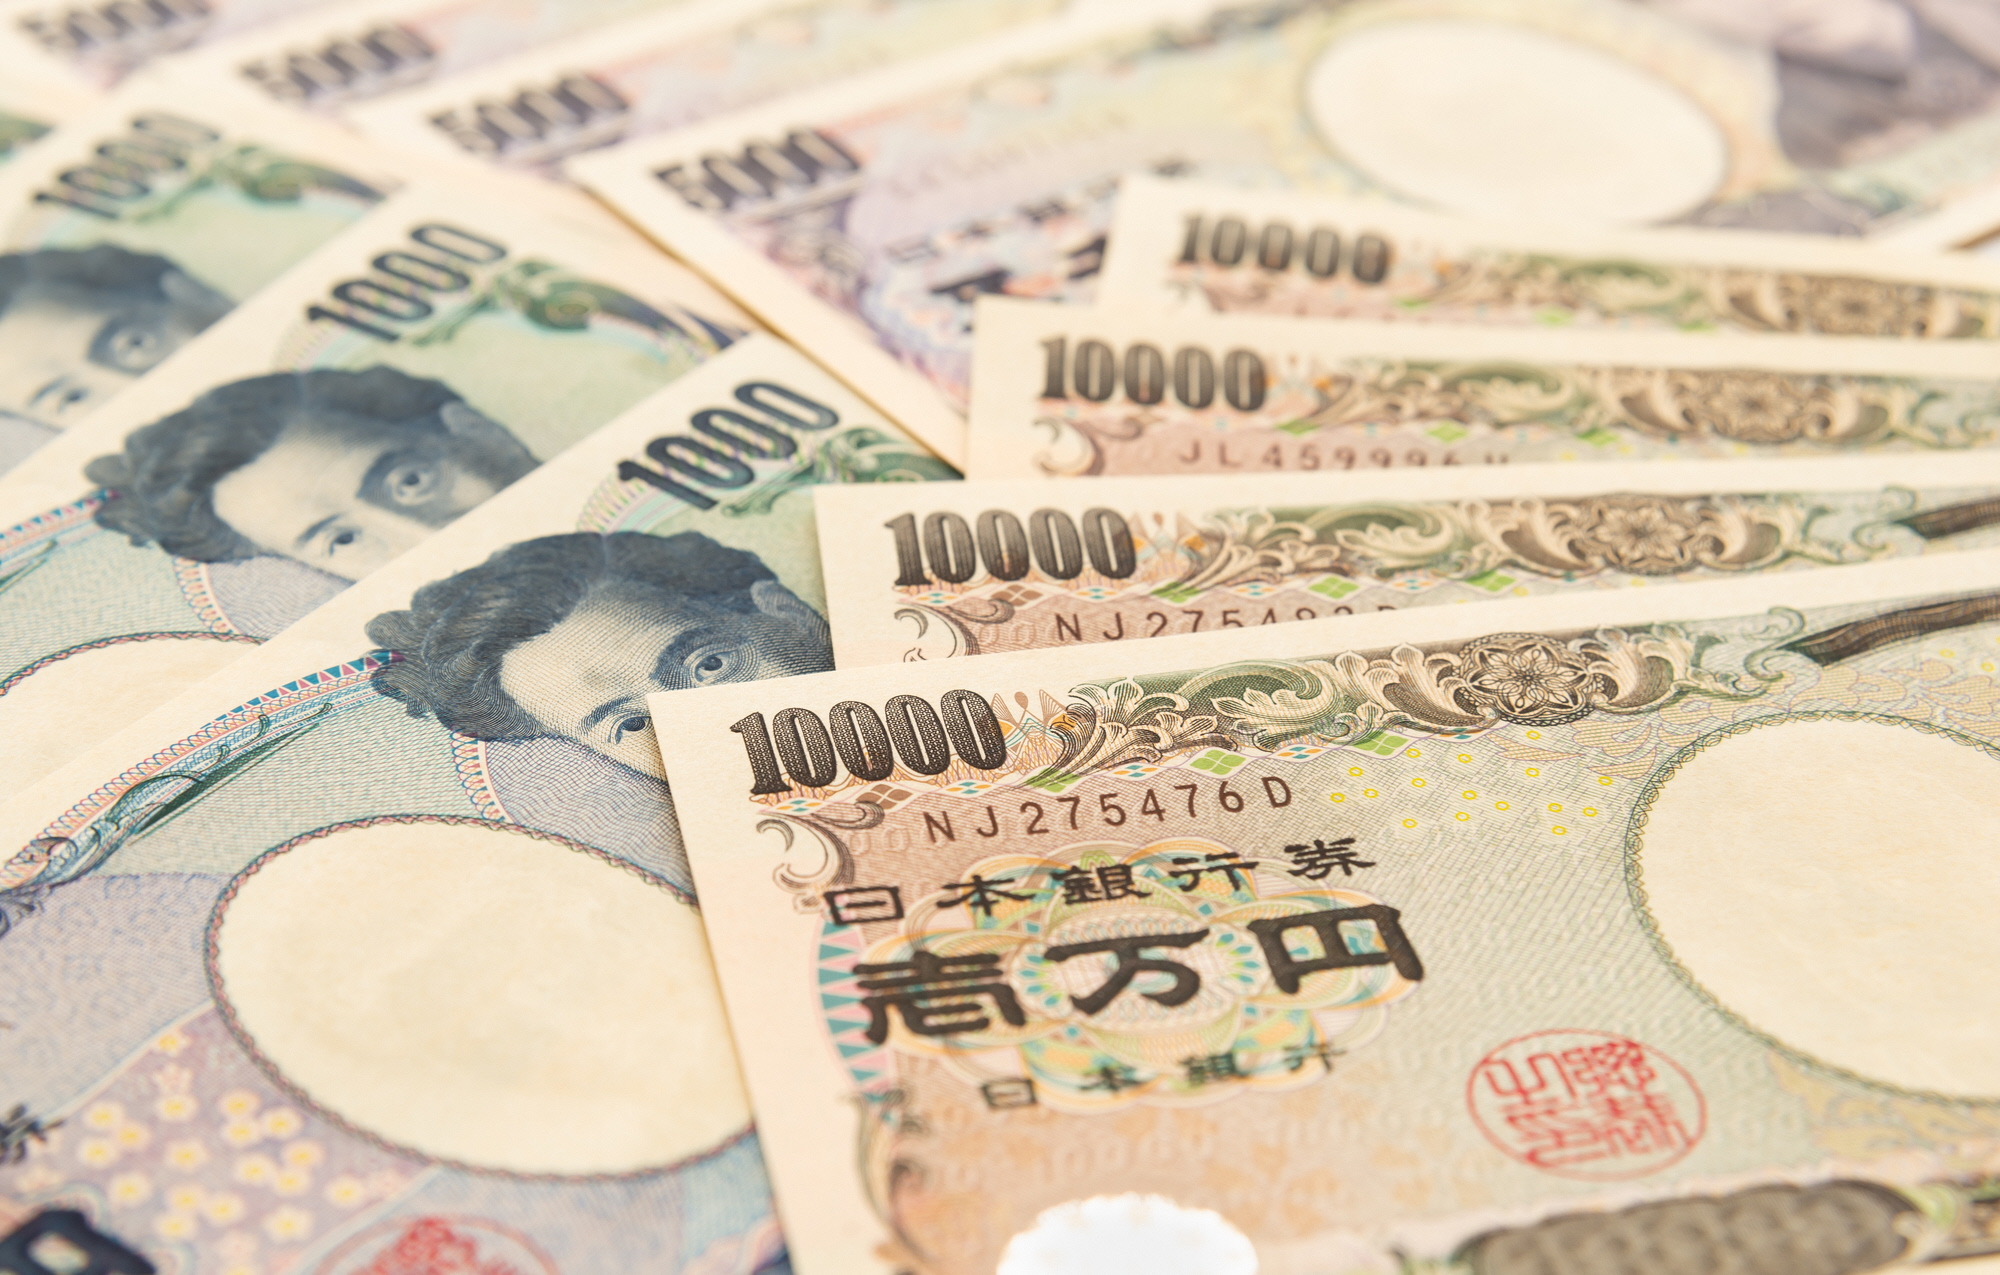 Economic Measures, Prime Minister Fumio Kishida ‘Preparing for Economic Downturn’, 29.1 trillion yen in supplemental spending